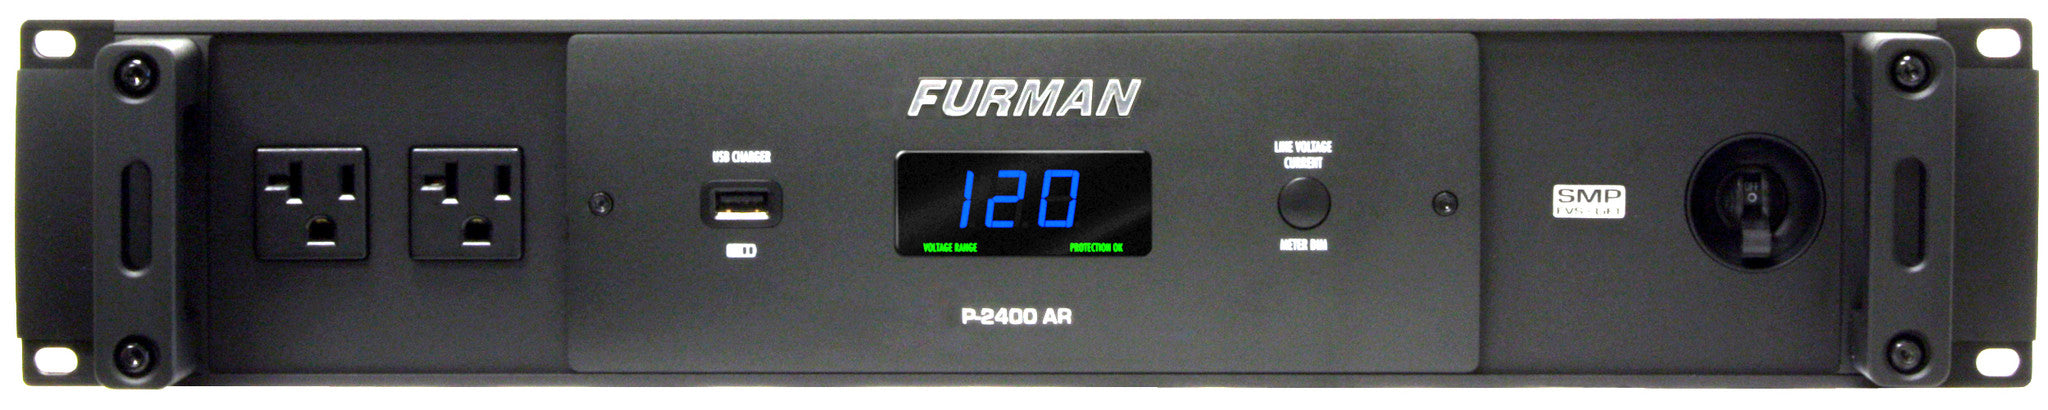 Accessories - Furman - Furman Sound P-2400 AR - Professional Audio Design, Inc